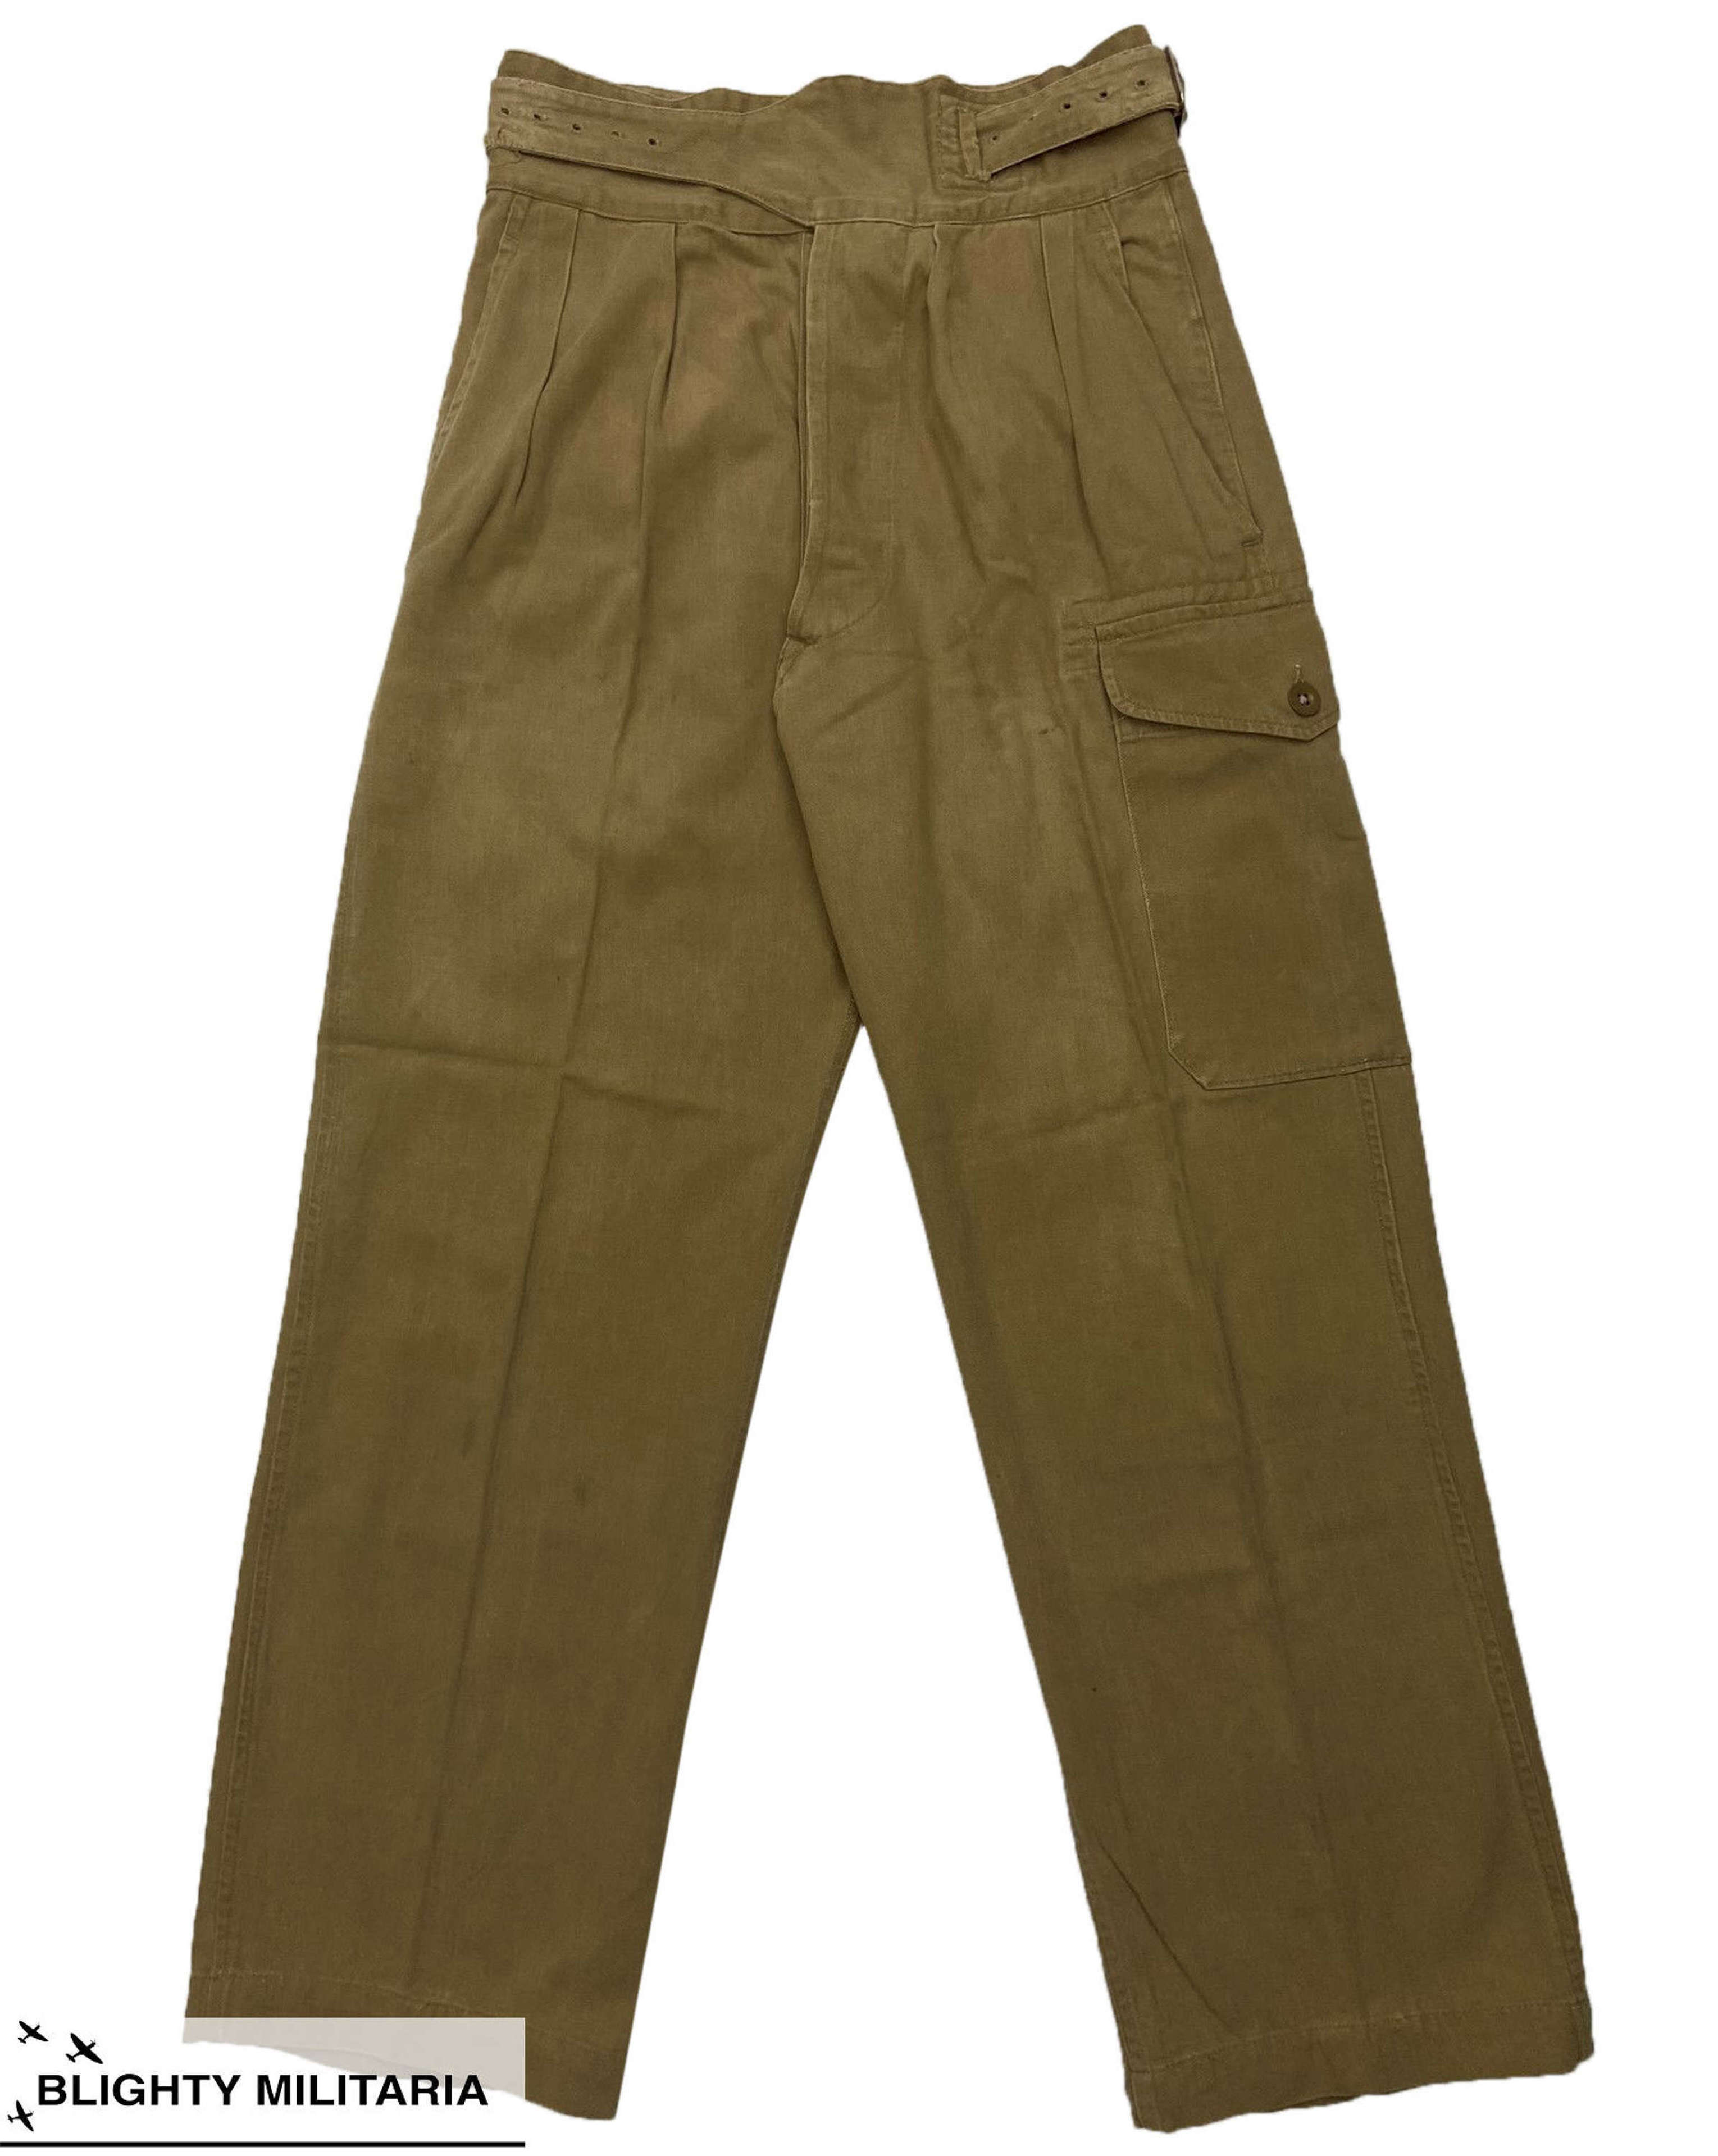 Original Early 1950s 1950 Pattern Khaki Drill Trousers - Size 1